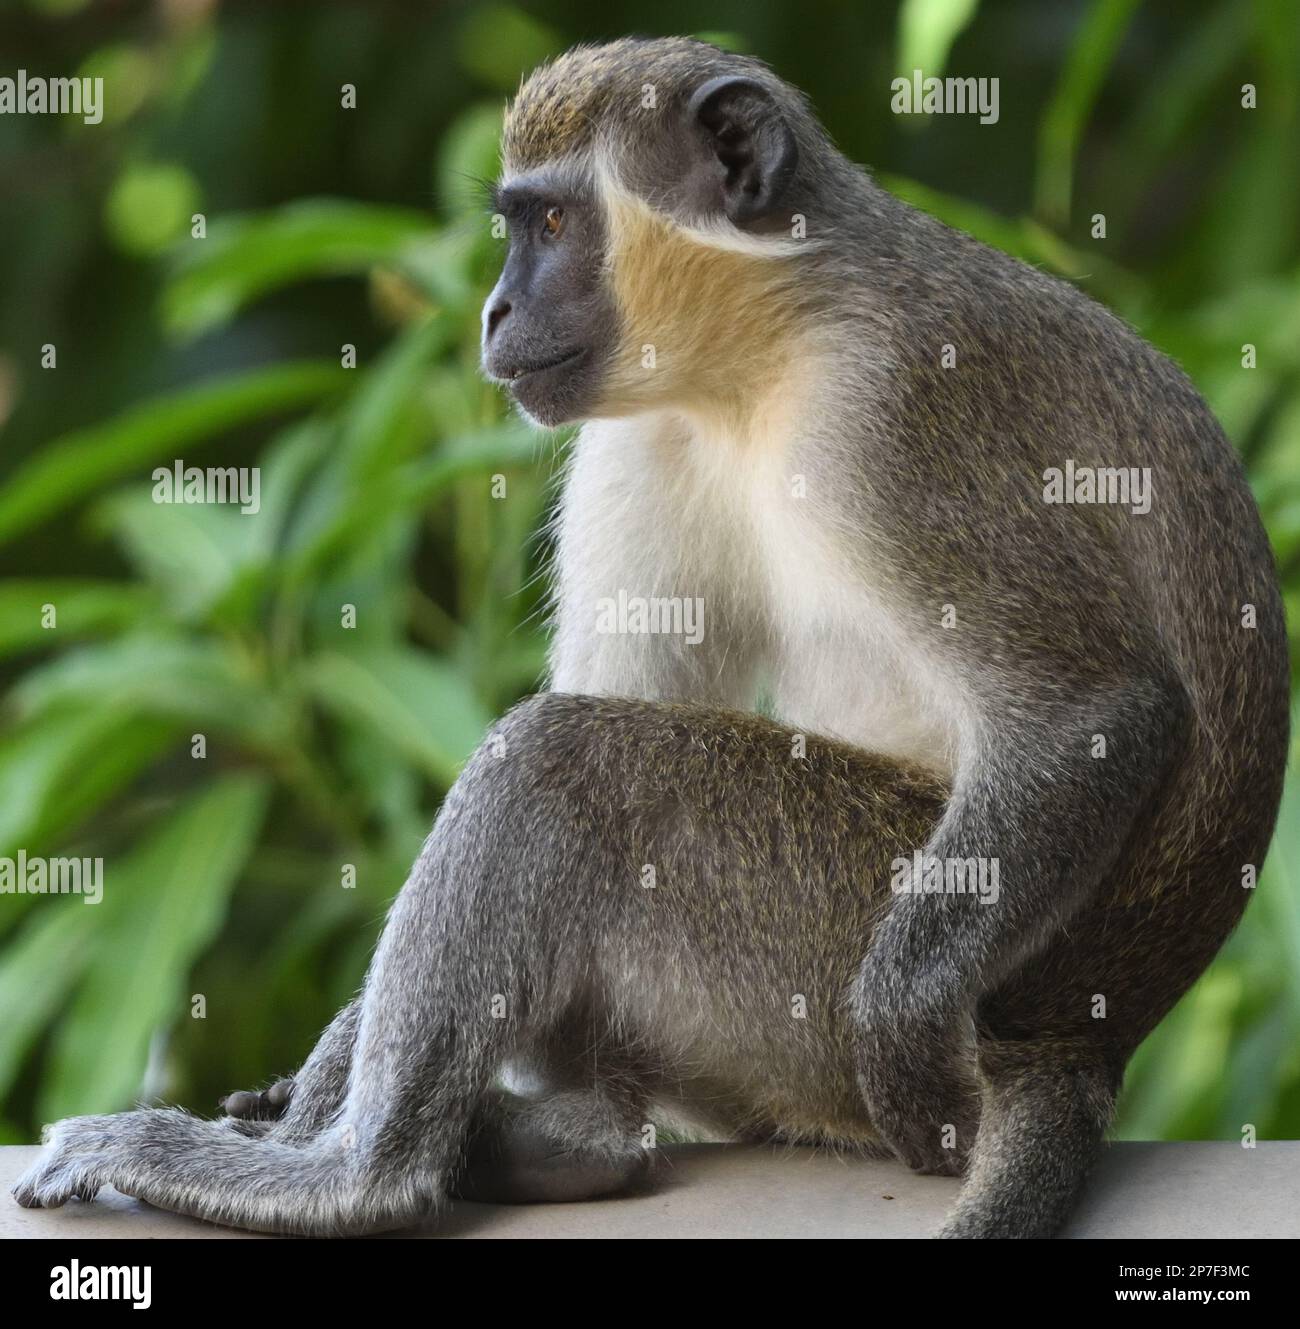 Mono verde fotografías e imágenes de alta resolución - Alamy